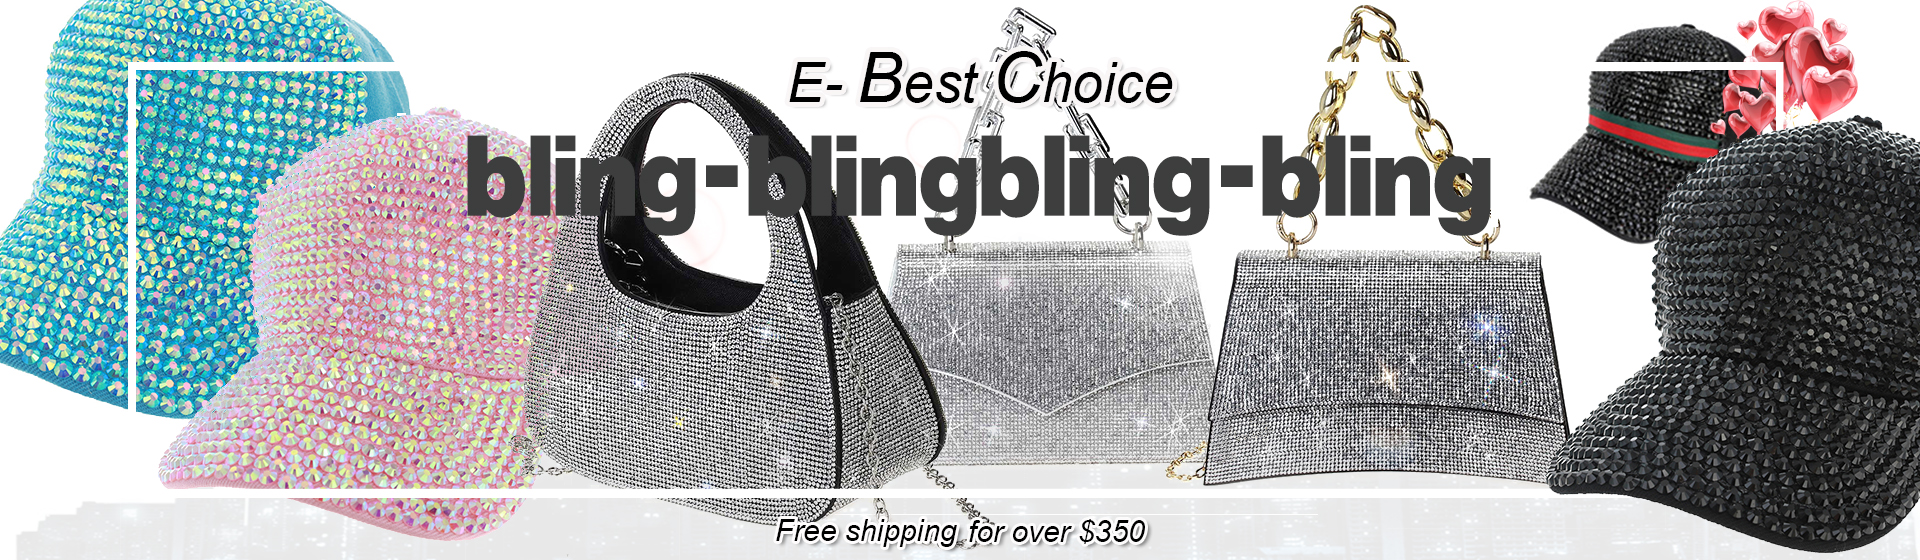 Shyanne Leather Tooled Studded Bling Handbag Purse | eBay